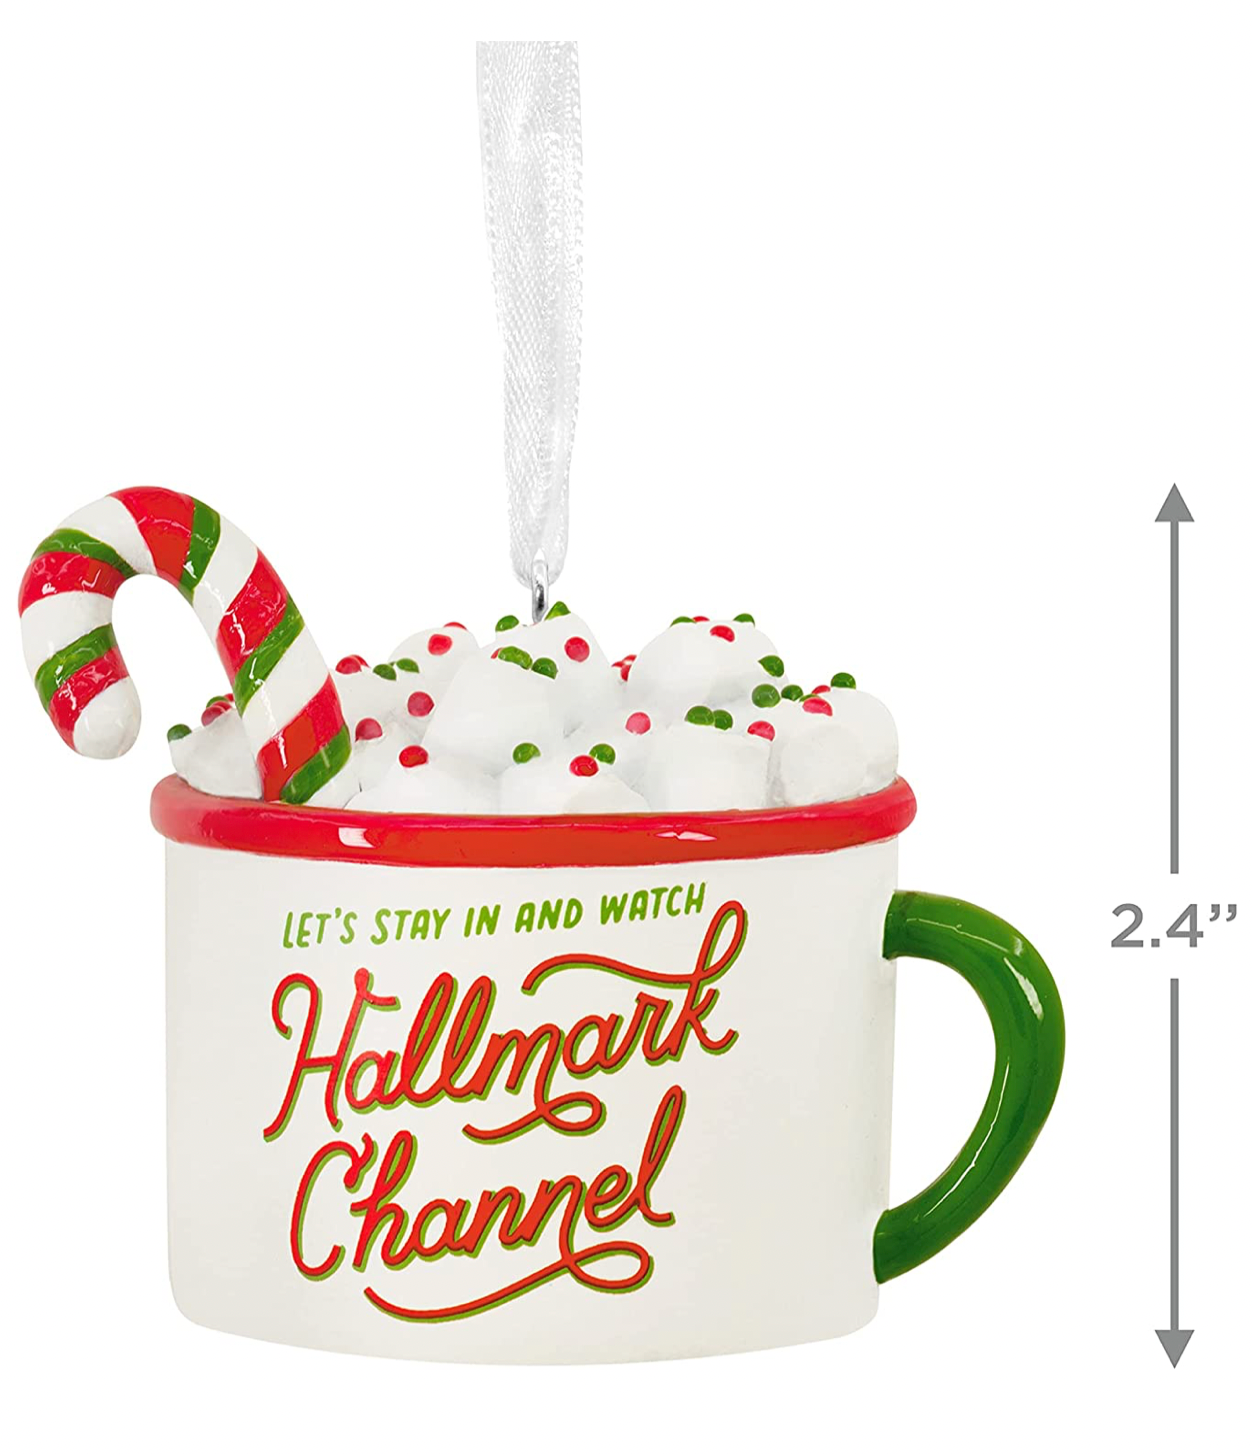 Hallmark Channel Hot Cocoa Mug Christmas Ornament New